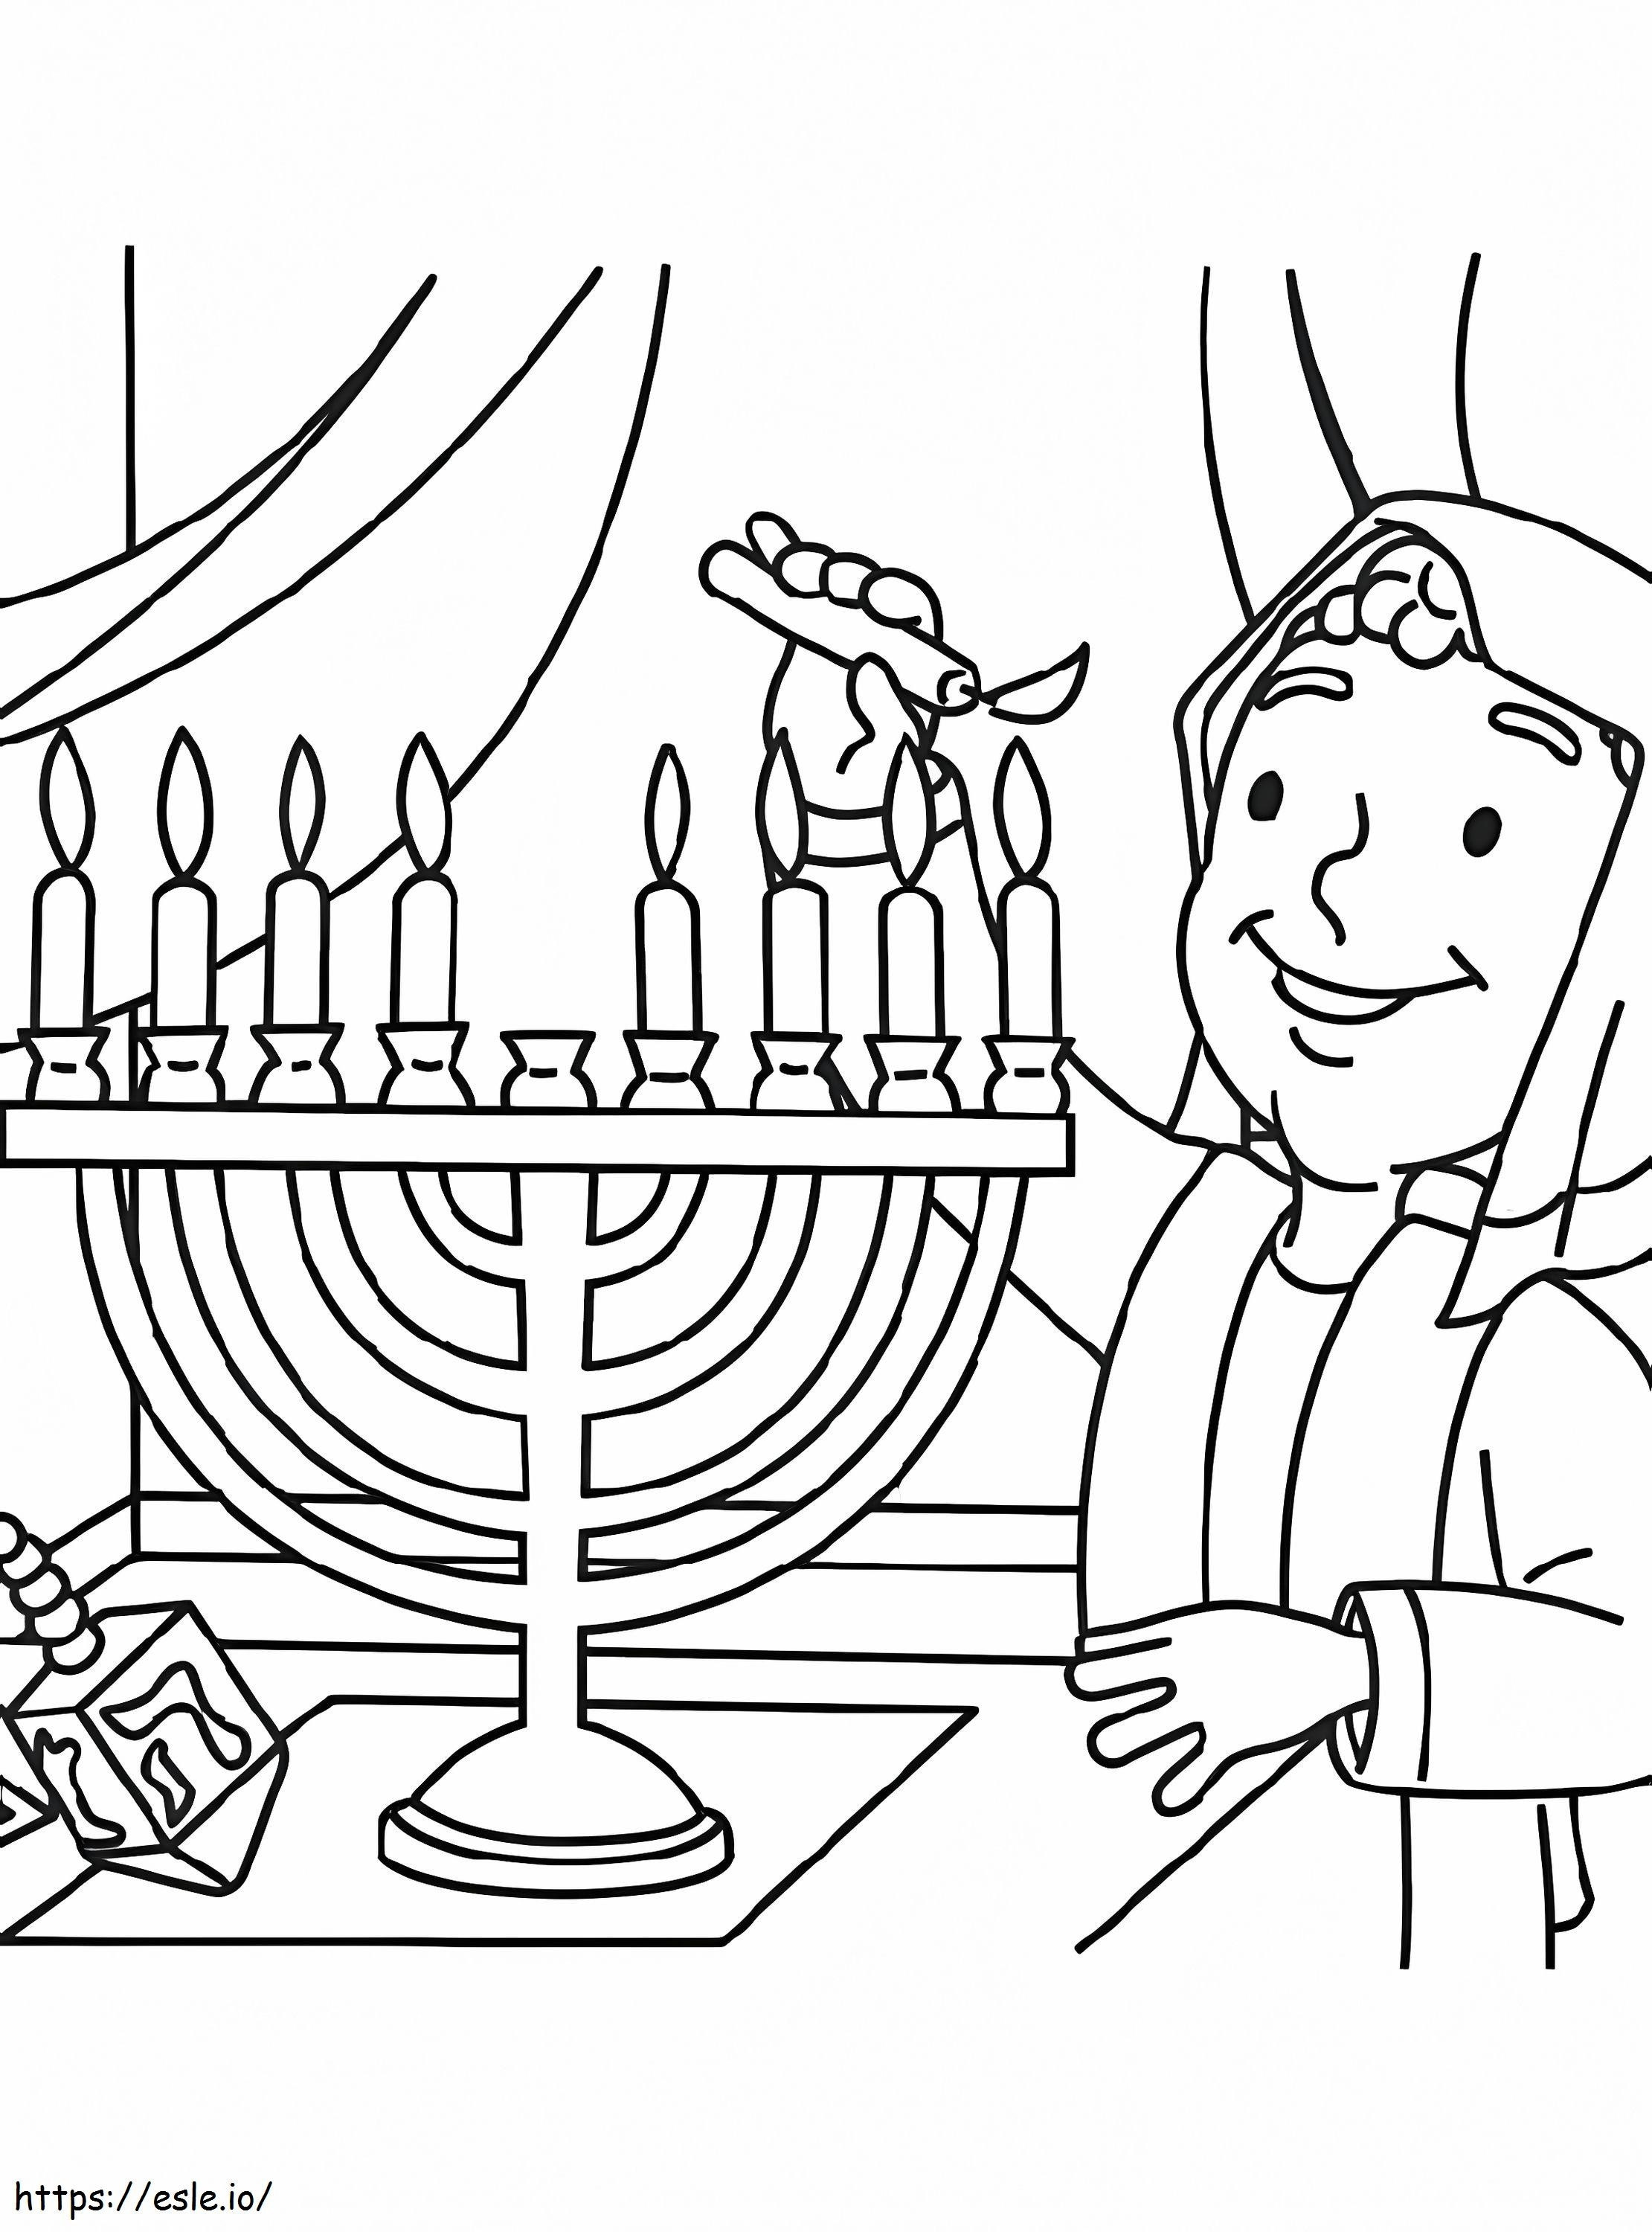 Imprimir Hanukkah Menorah para colorear